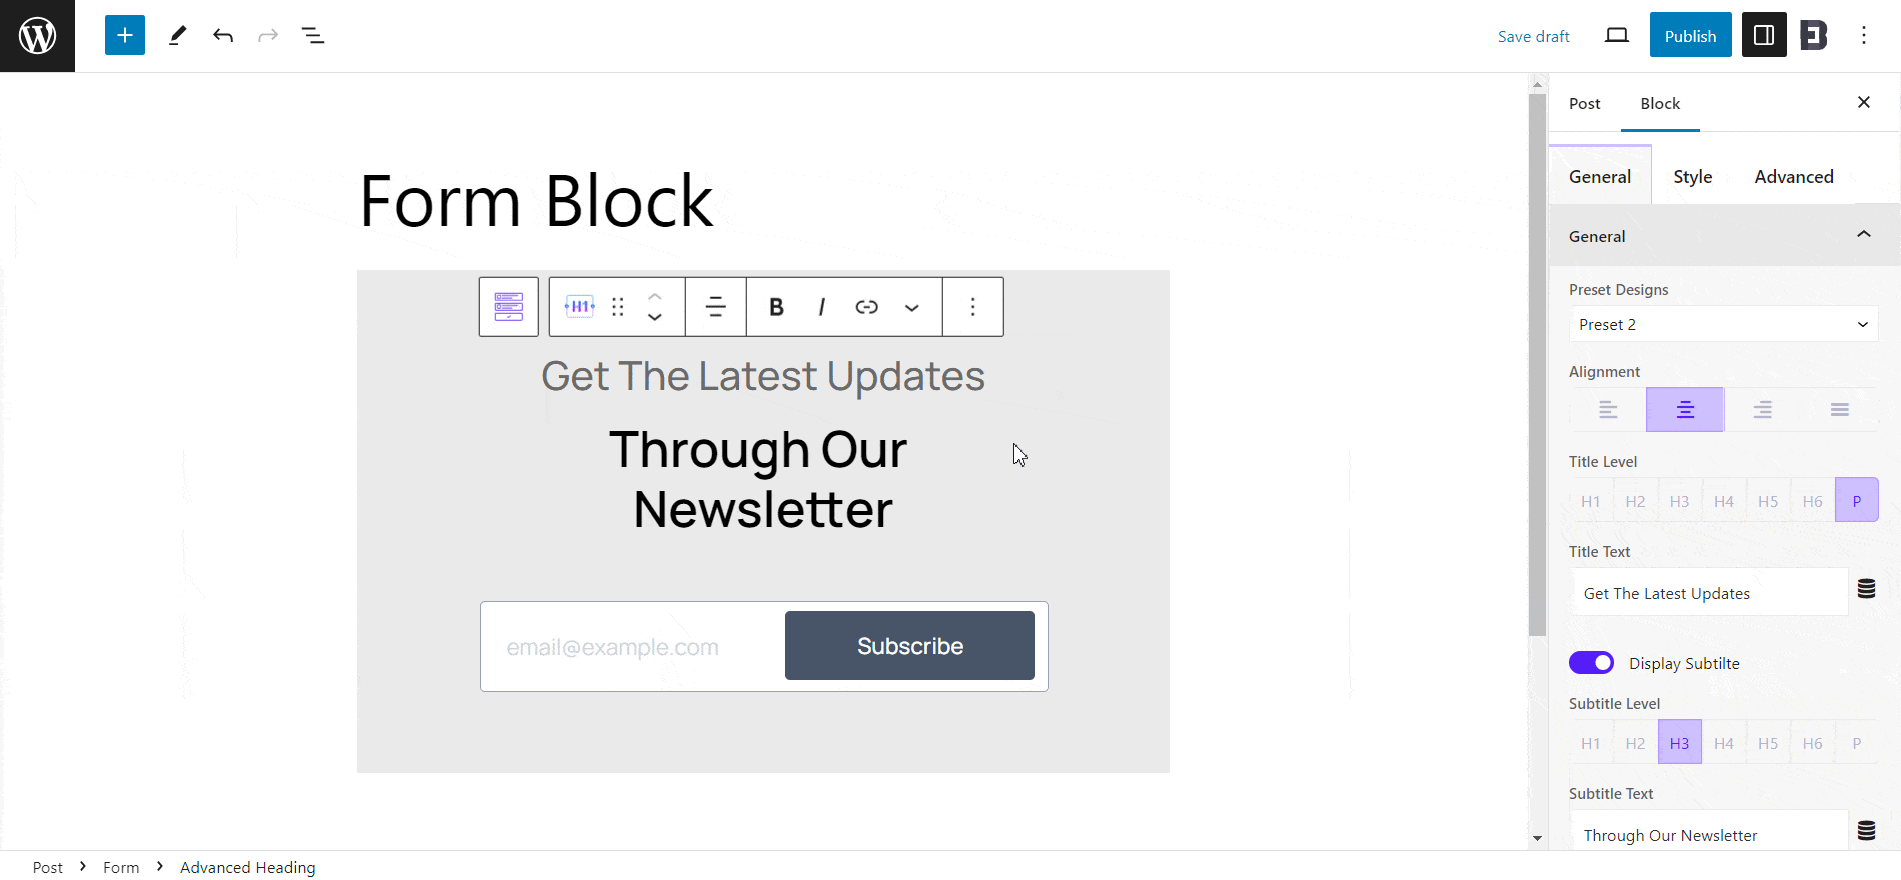 Form Block